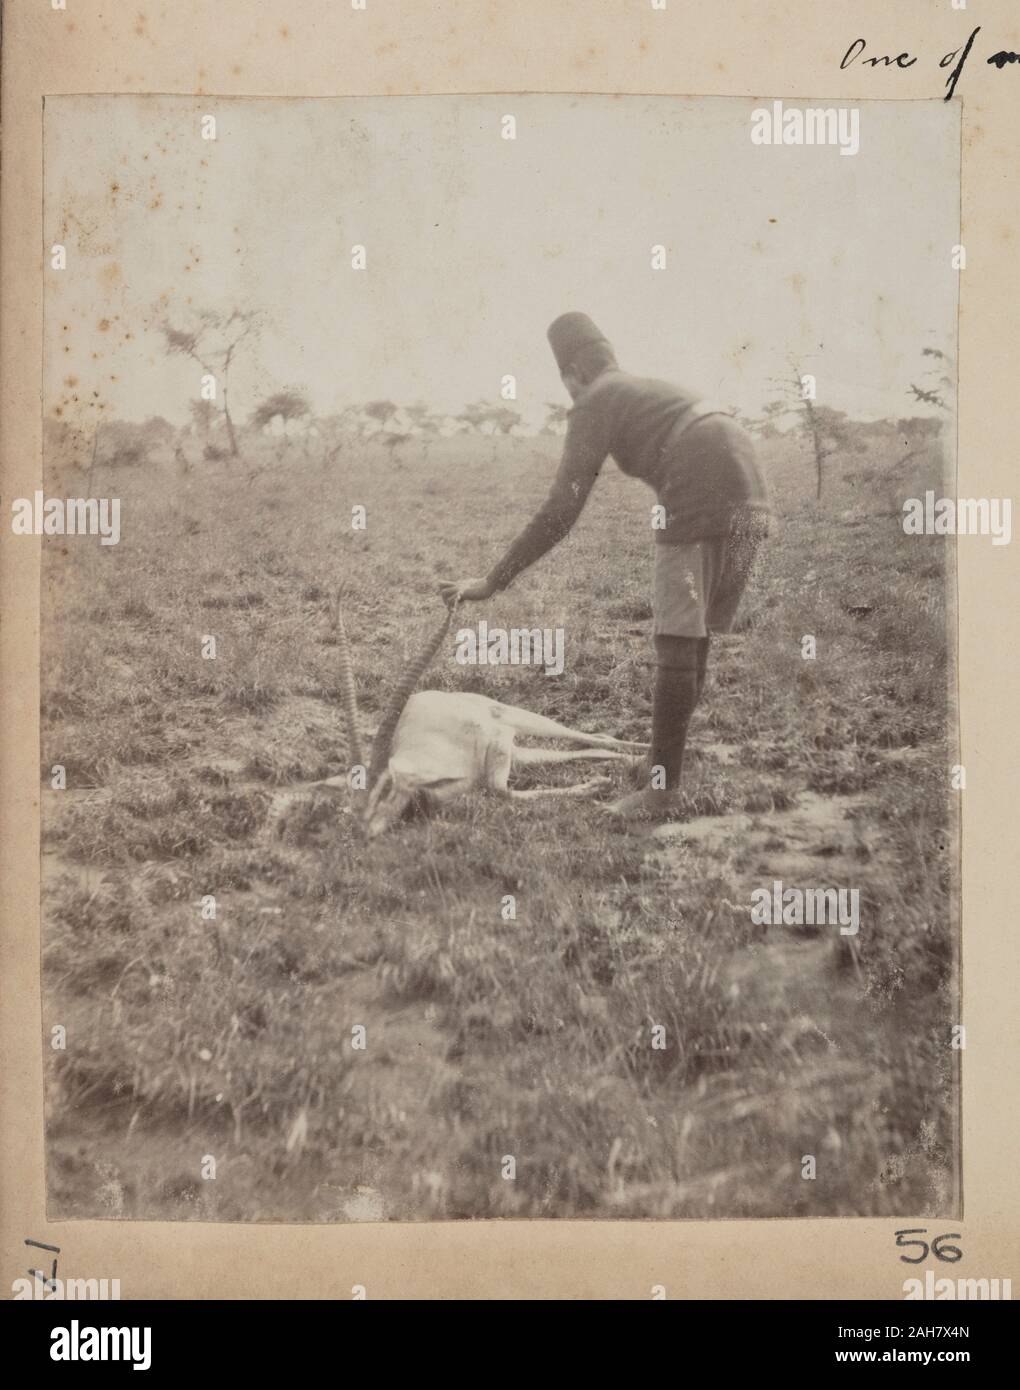 Kenya, Uniformed man standing by dead gazelle Original manuscript caption: One of my orderlies + Thomson's Gazelle, circa 1910. 2005/078/1/56. Stock Photo